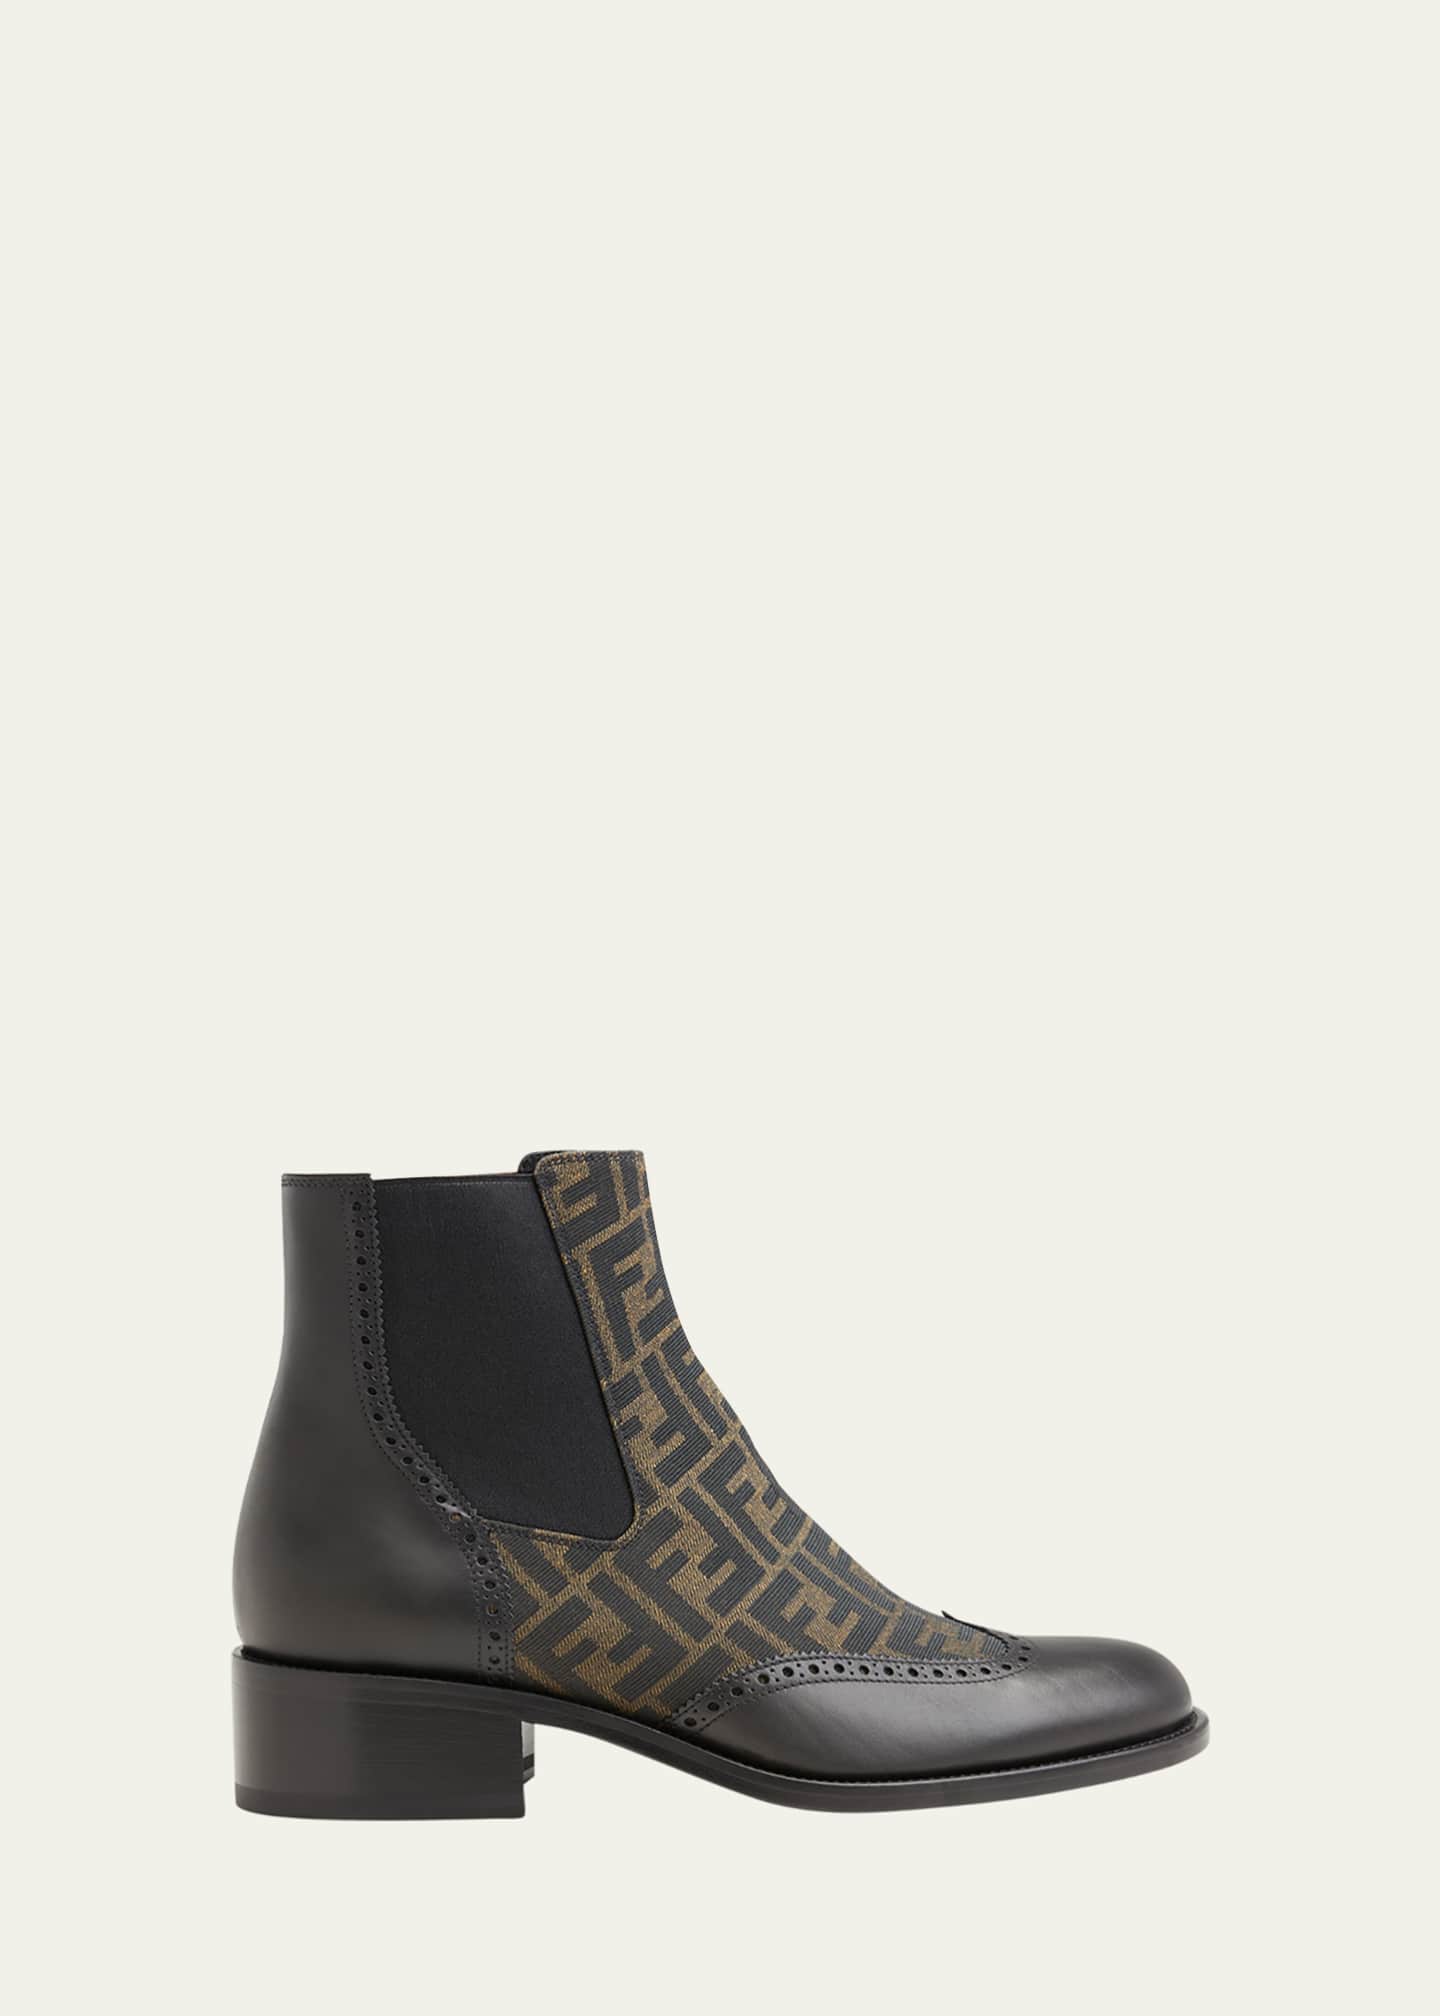 Fendi Men's Stivaletto Leather & Textile Monogram Chelsea Boots ...